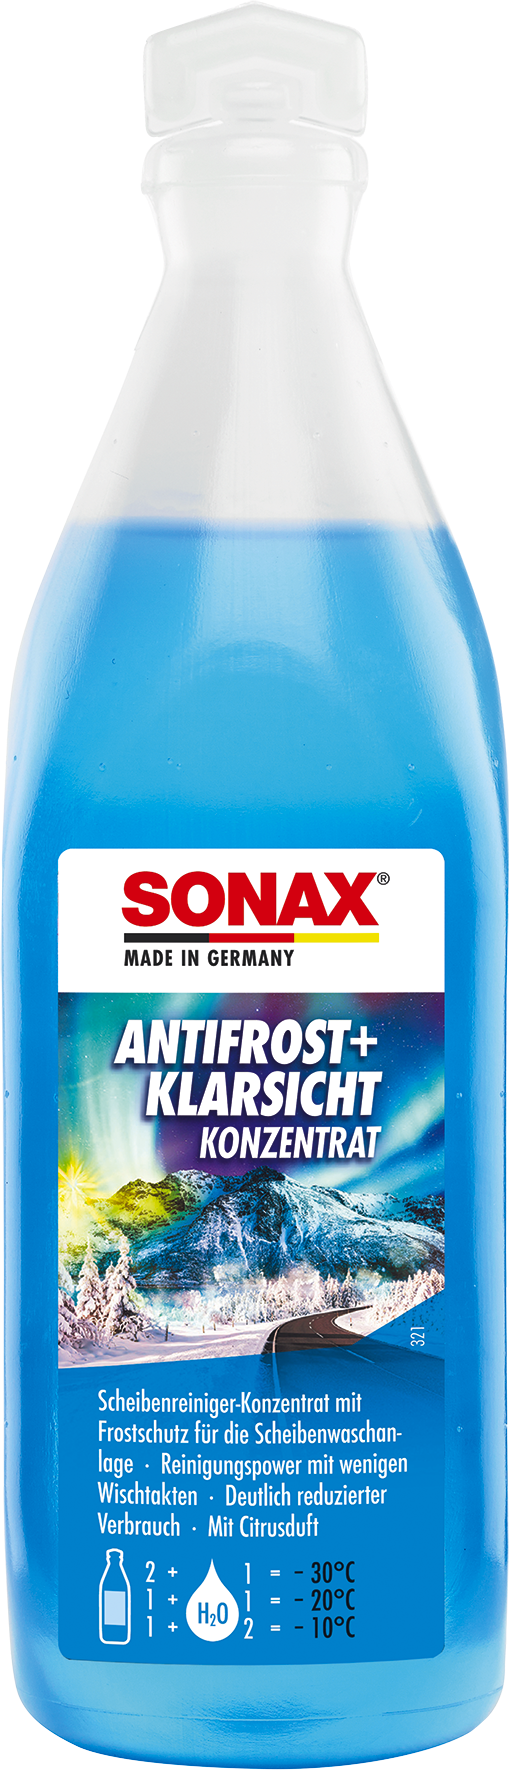 Sonax Antifrost + Klarsicht Konzentrat Citrus 5L